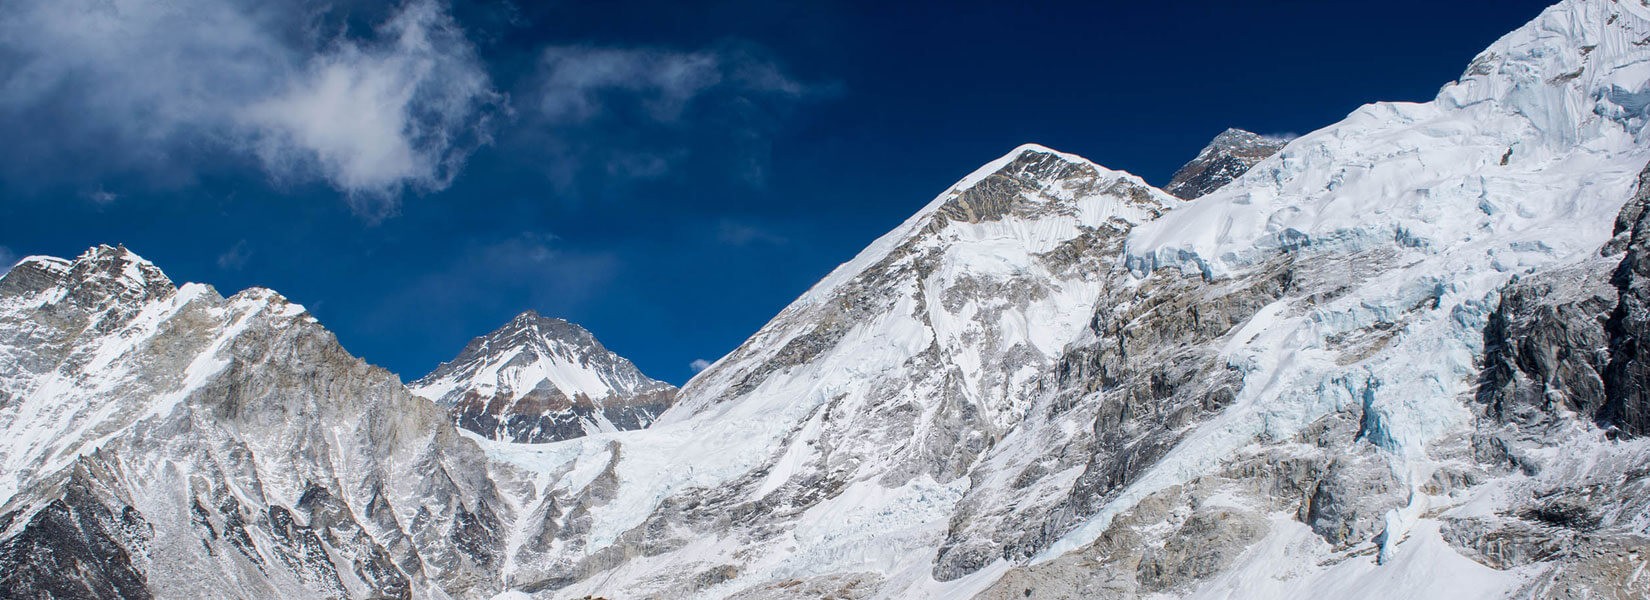 Khumbu Region-Everest Base Camp Trails